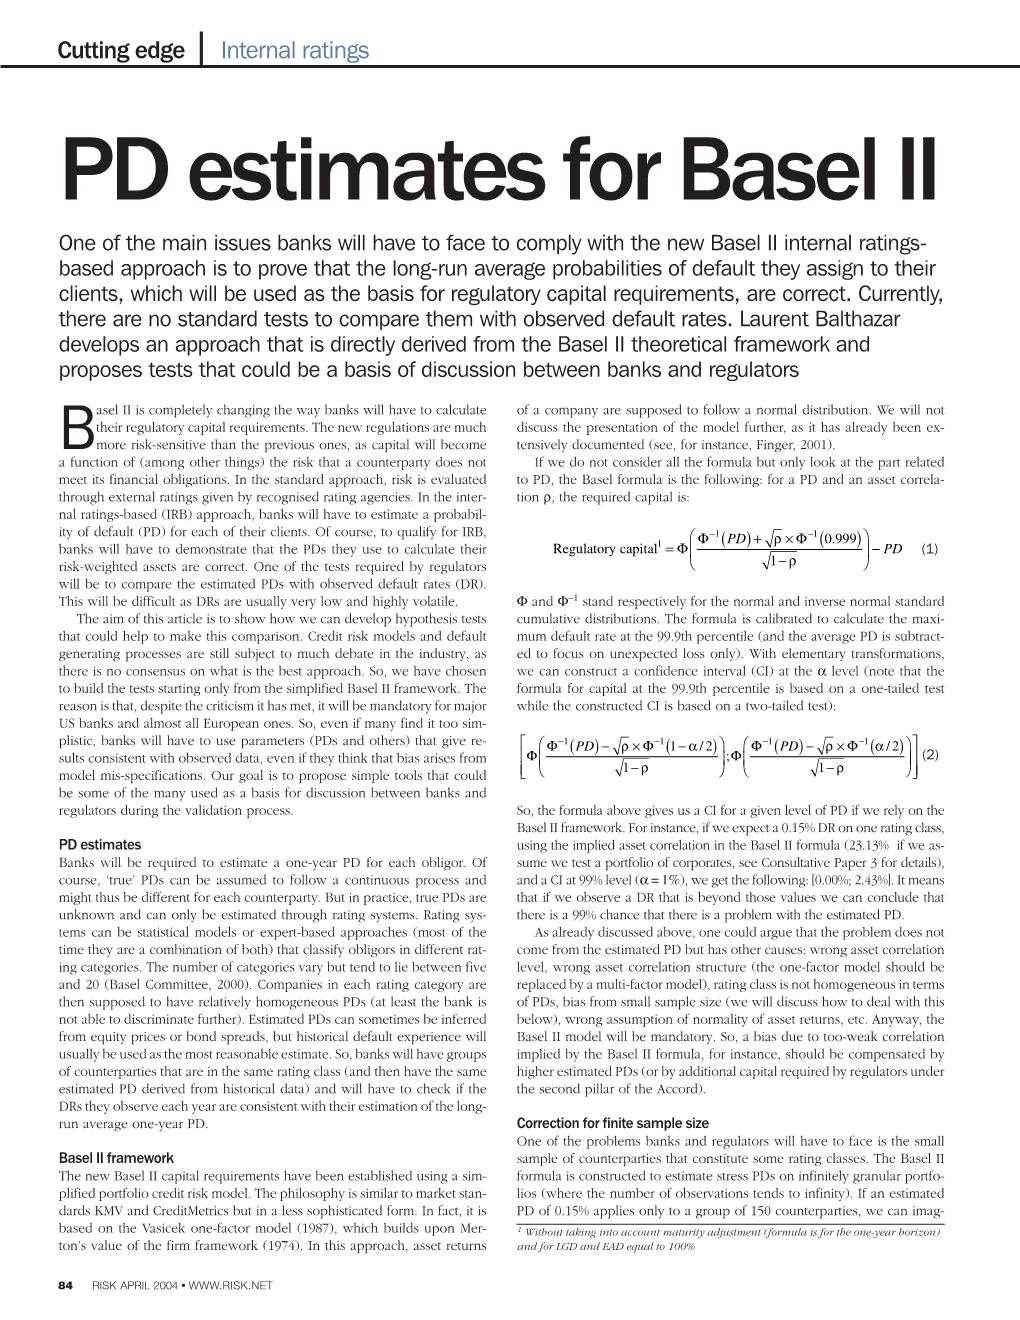 PD Estimates for Basel II